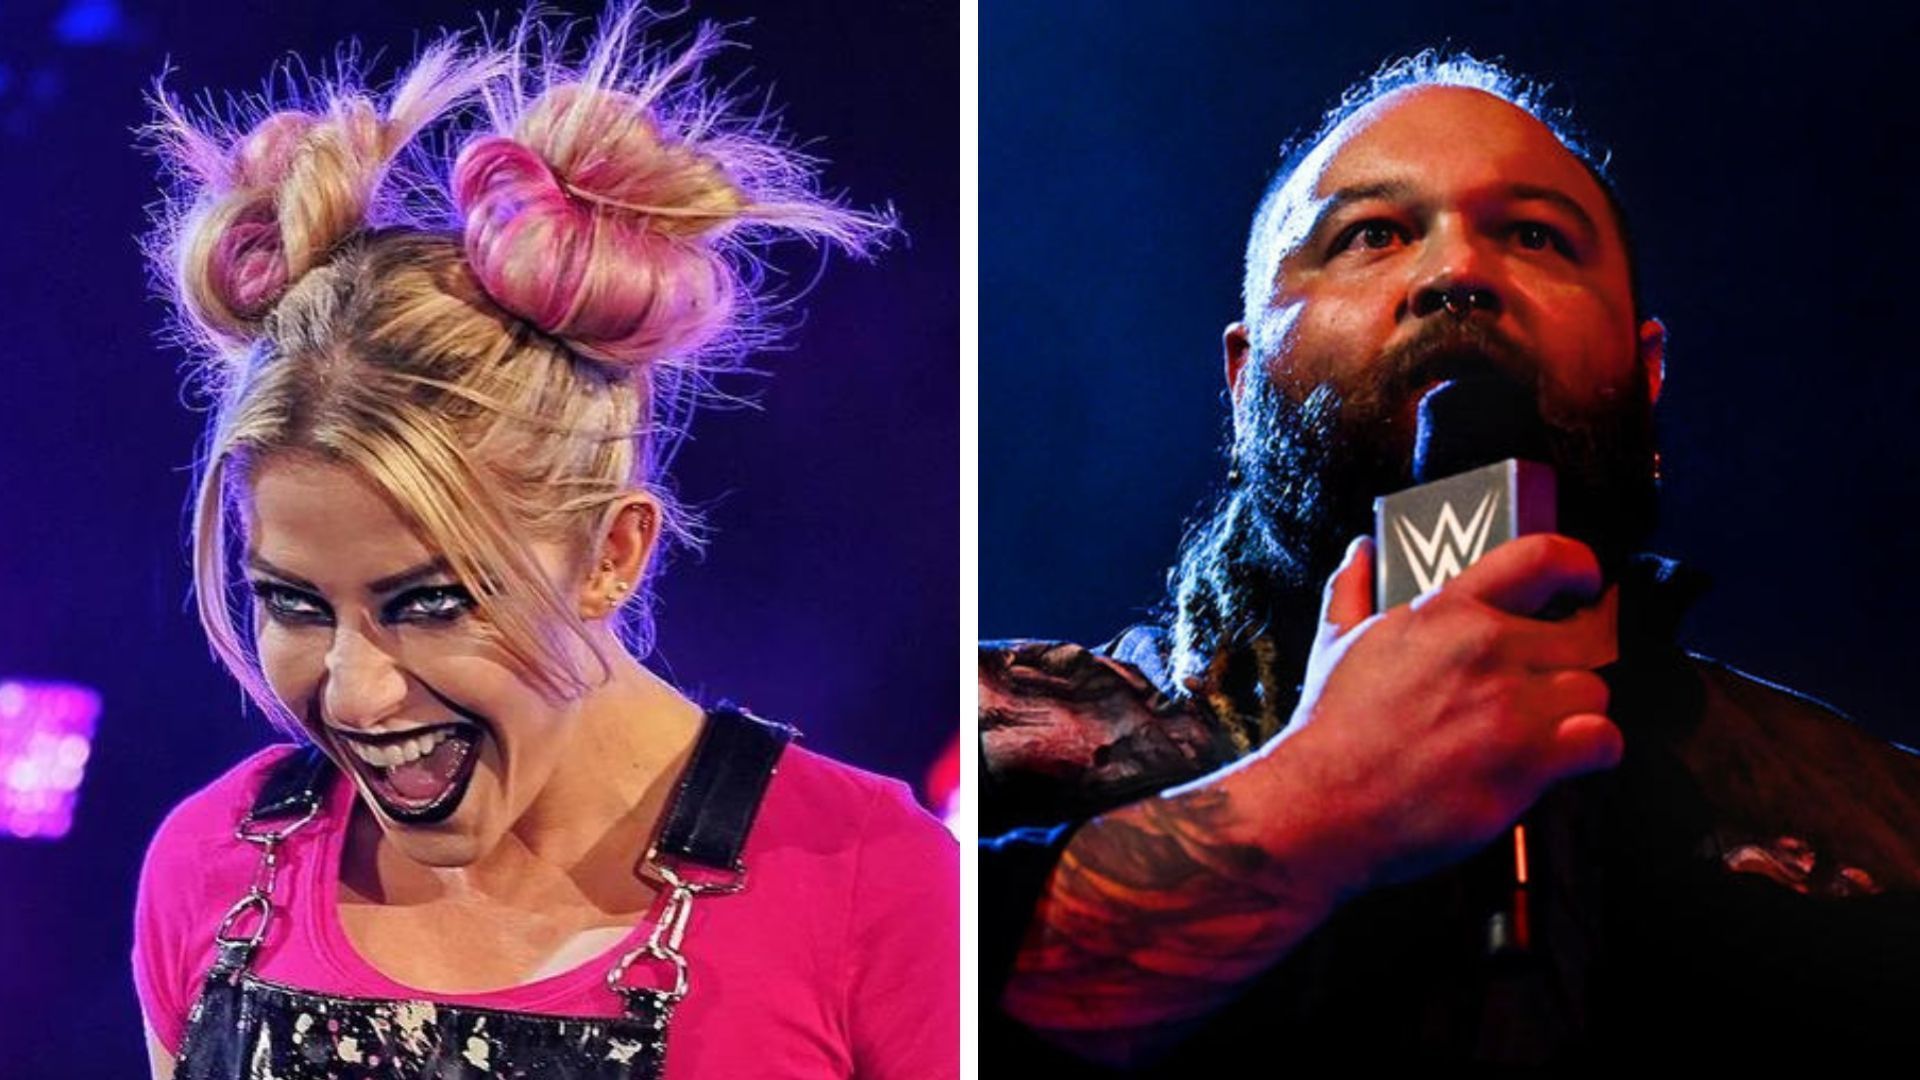 WWE Superstars Alexa Bliss and Bray Wyatt